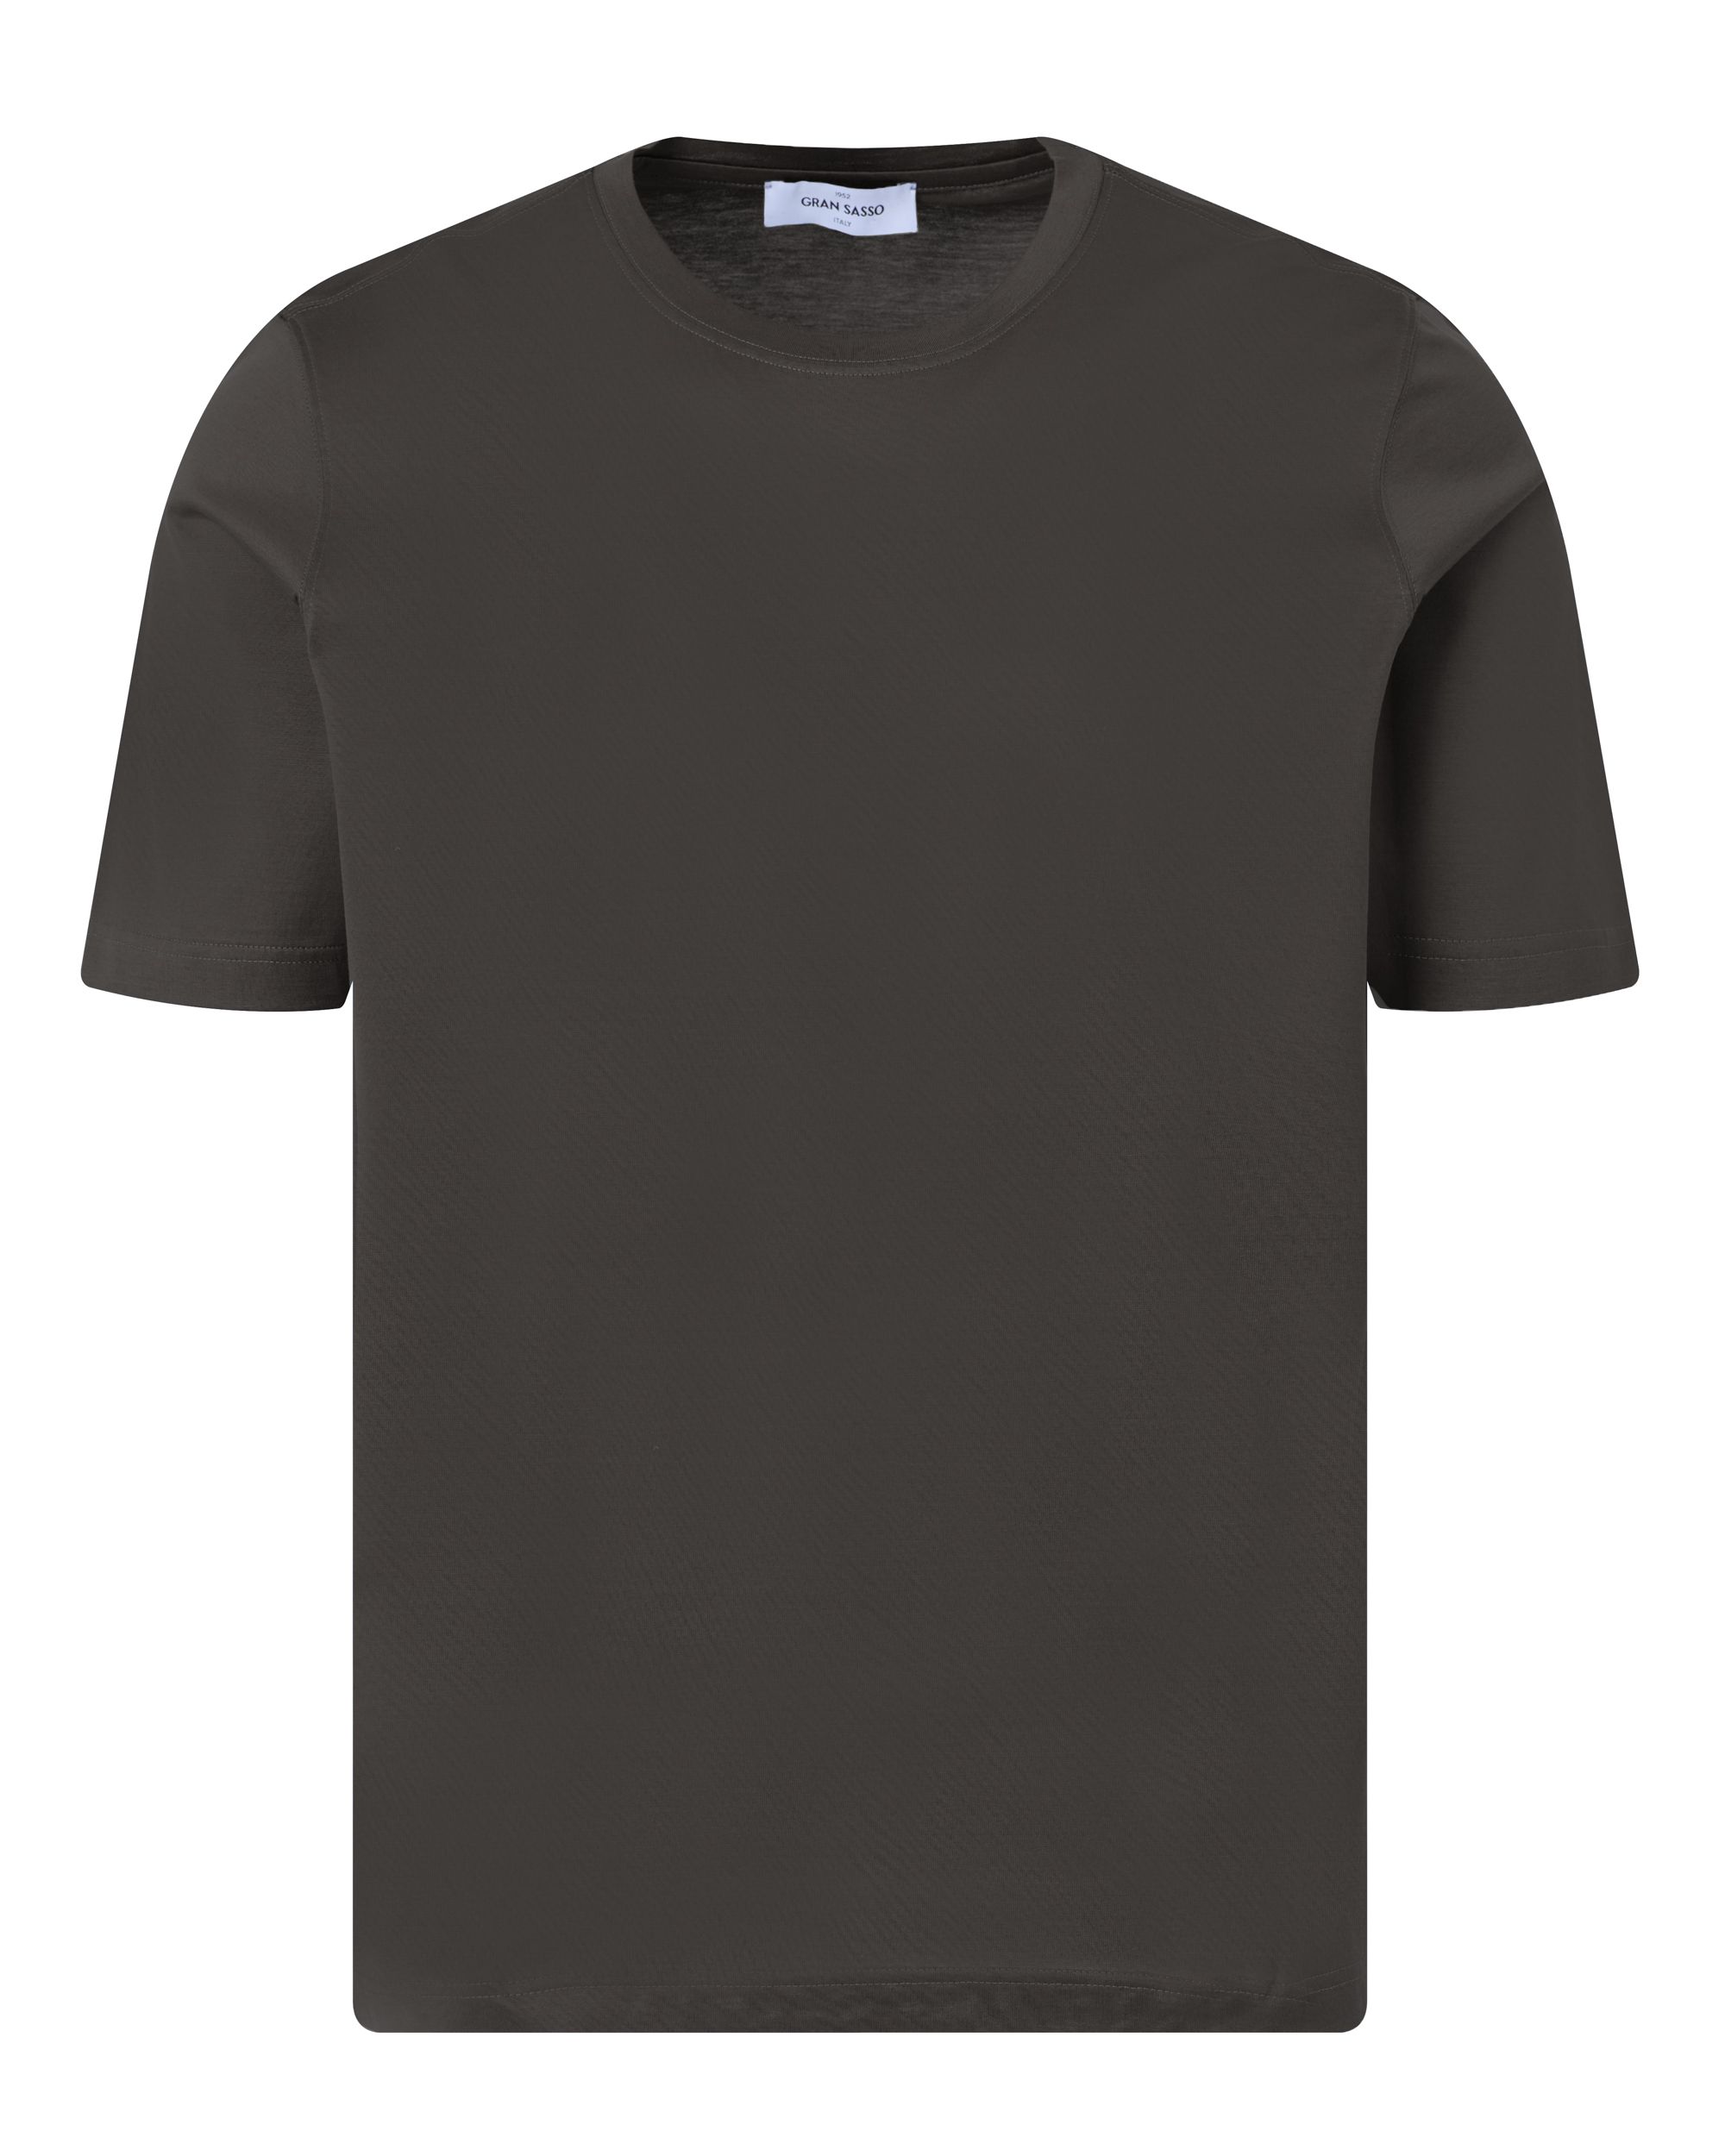 Gran Sasso T-shirt KM Donker bruin 091803-002-54